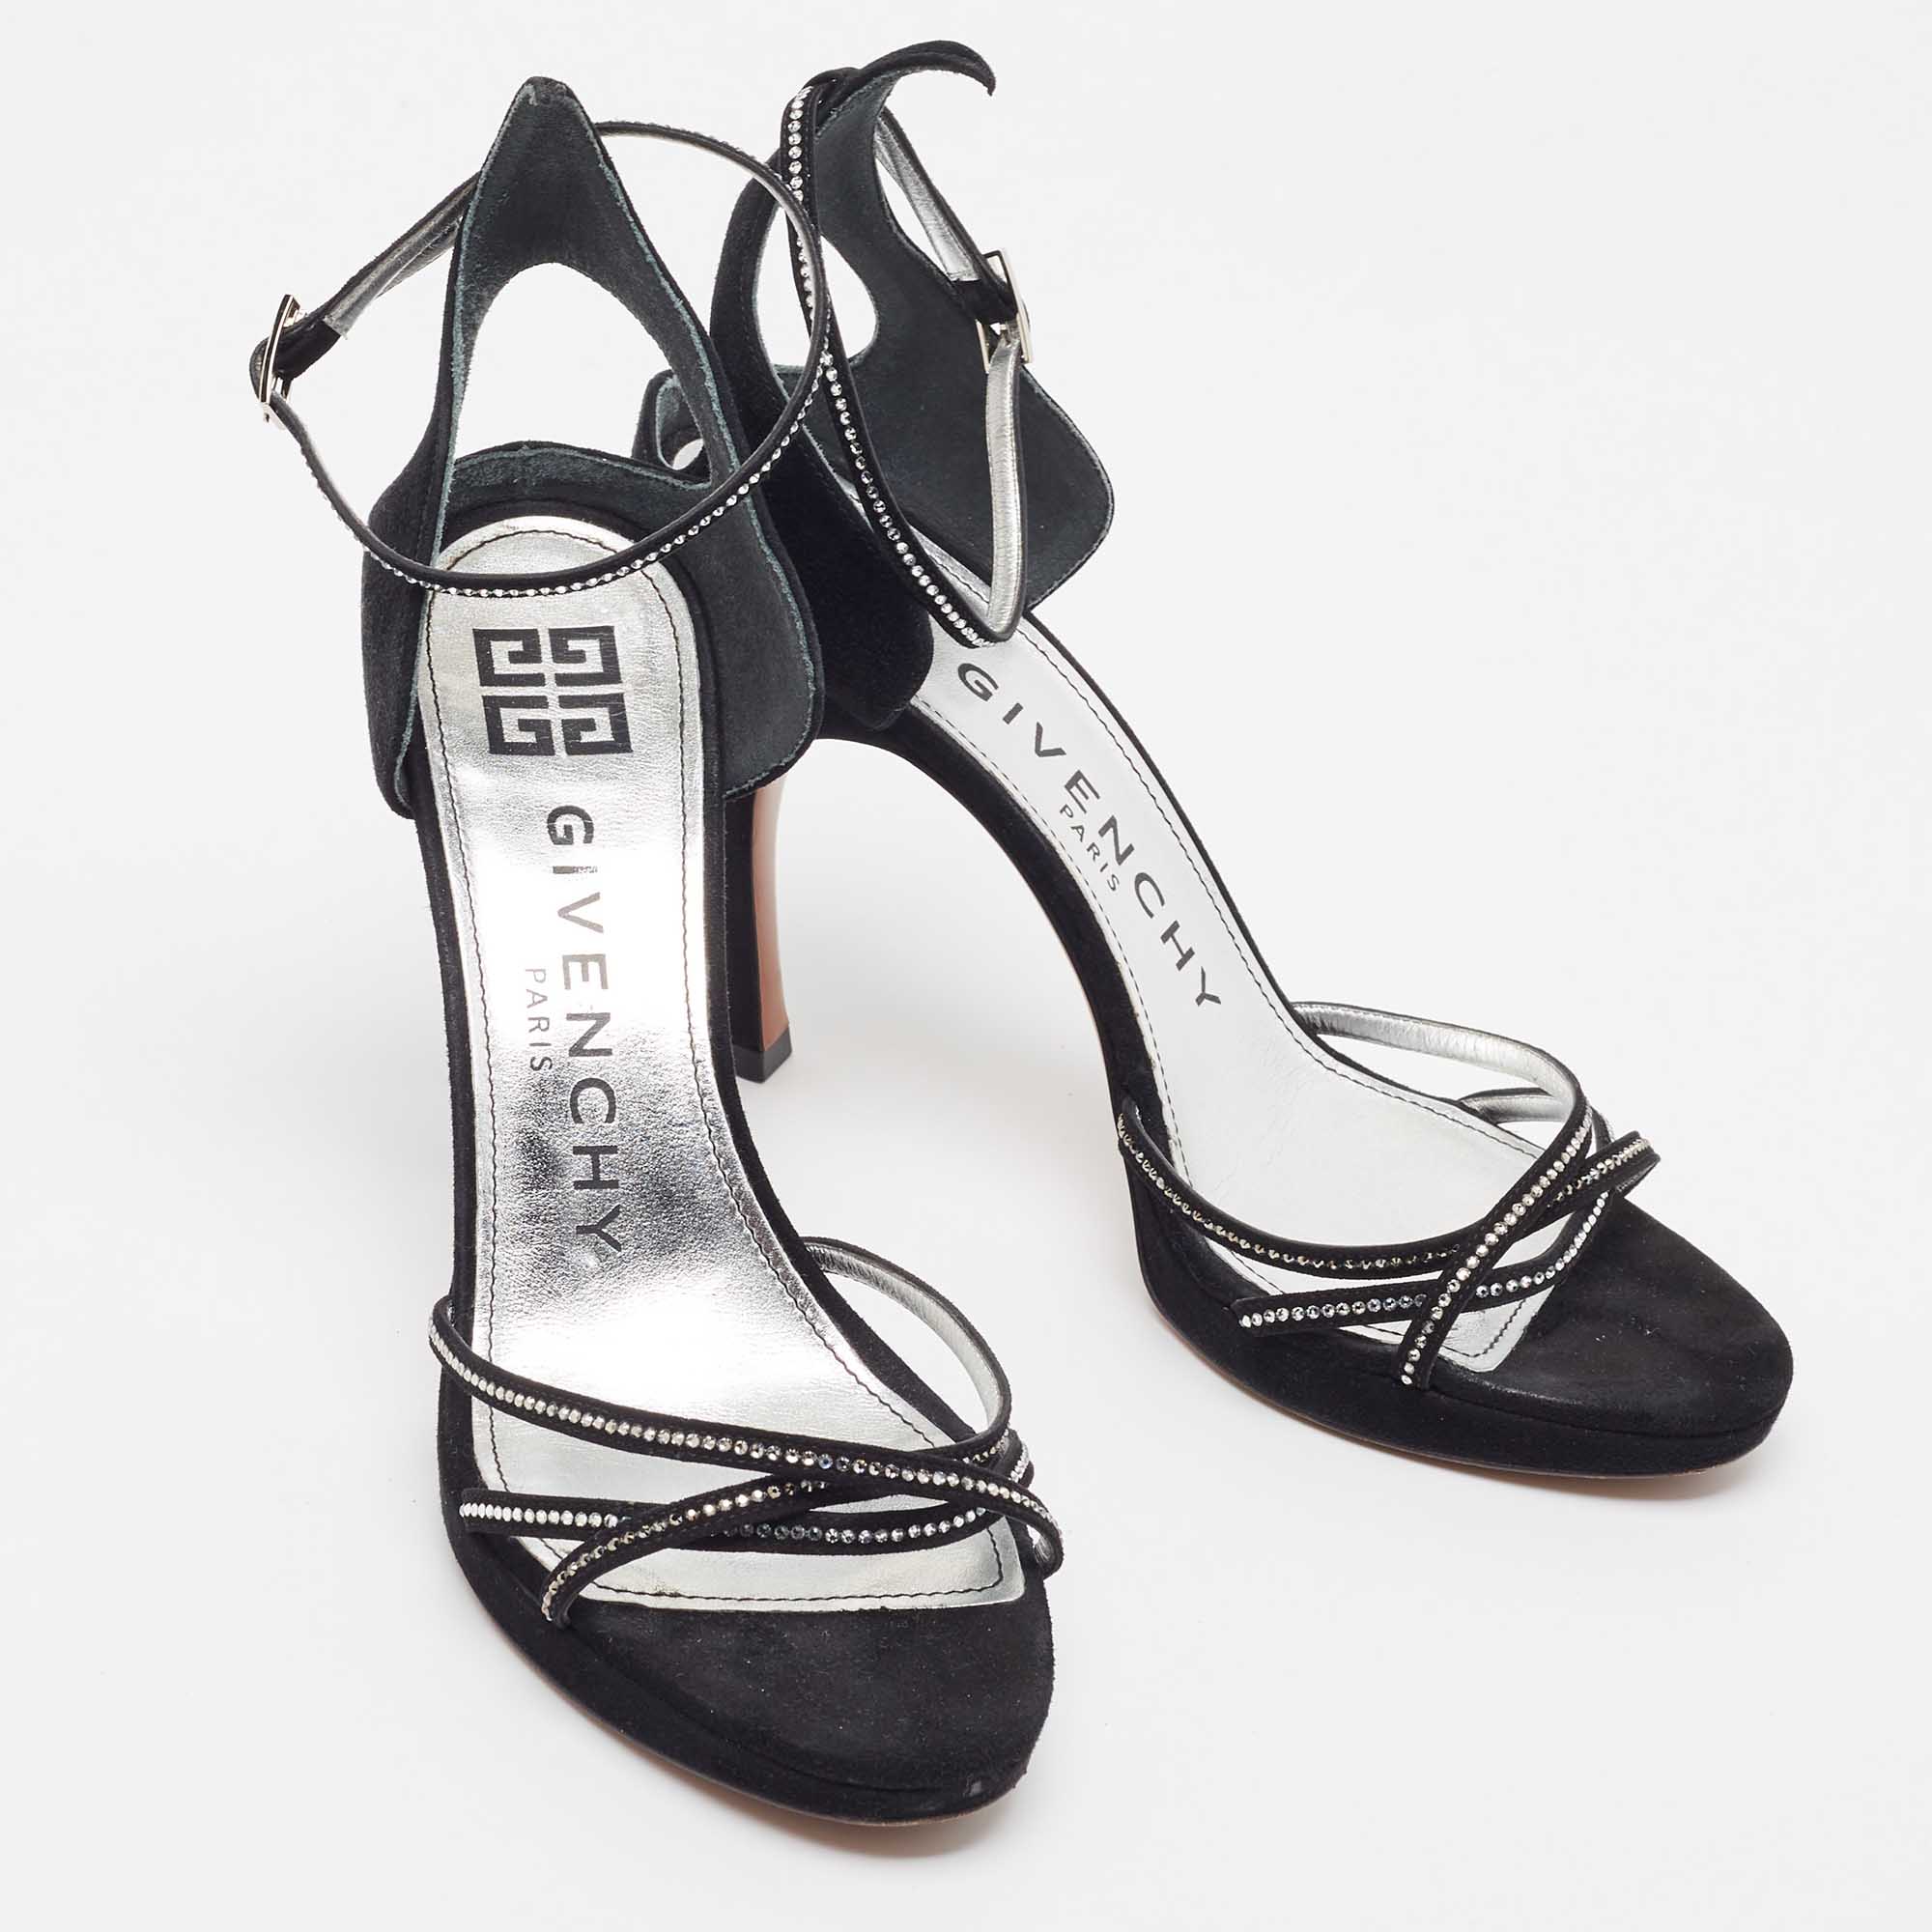 Givenchy Black Suede Crystal Embellished Strappy Sandals Size 40